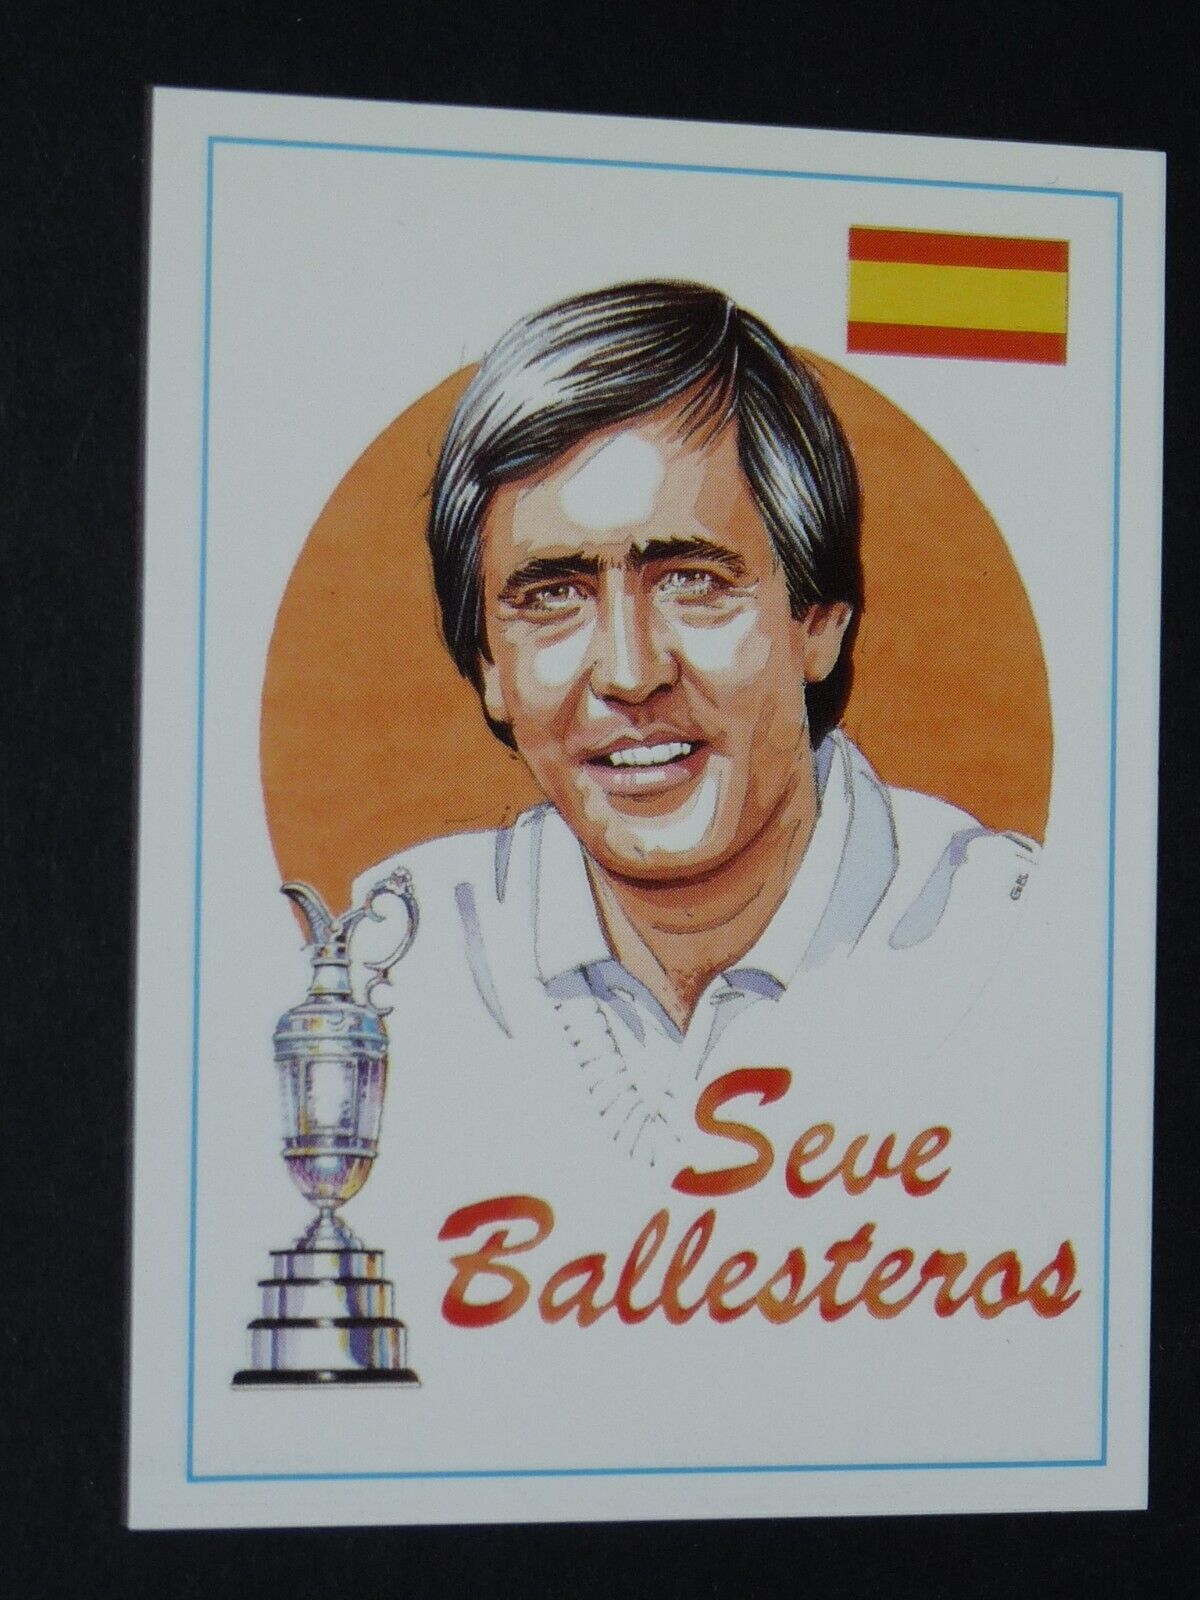 1993 GAMEPLAN CARD GOLF OPEN CHAMPIONS GOLFING #21 SEVERIANO BALLESTEROS SPAIN